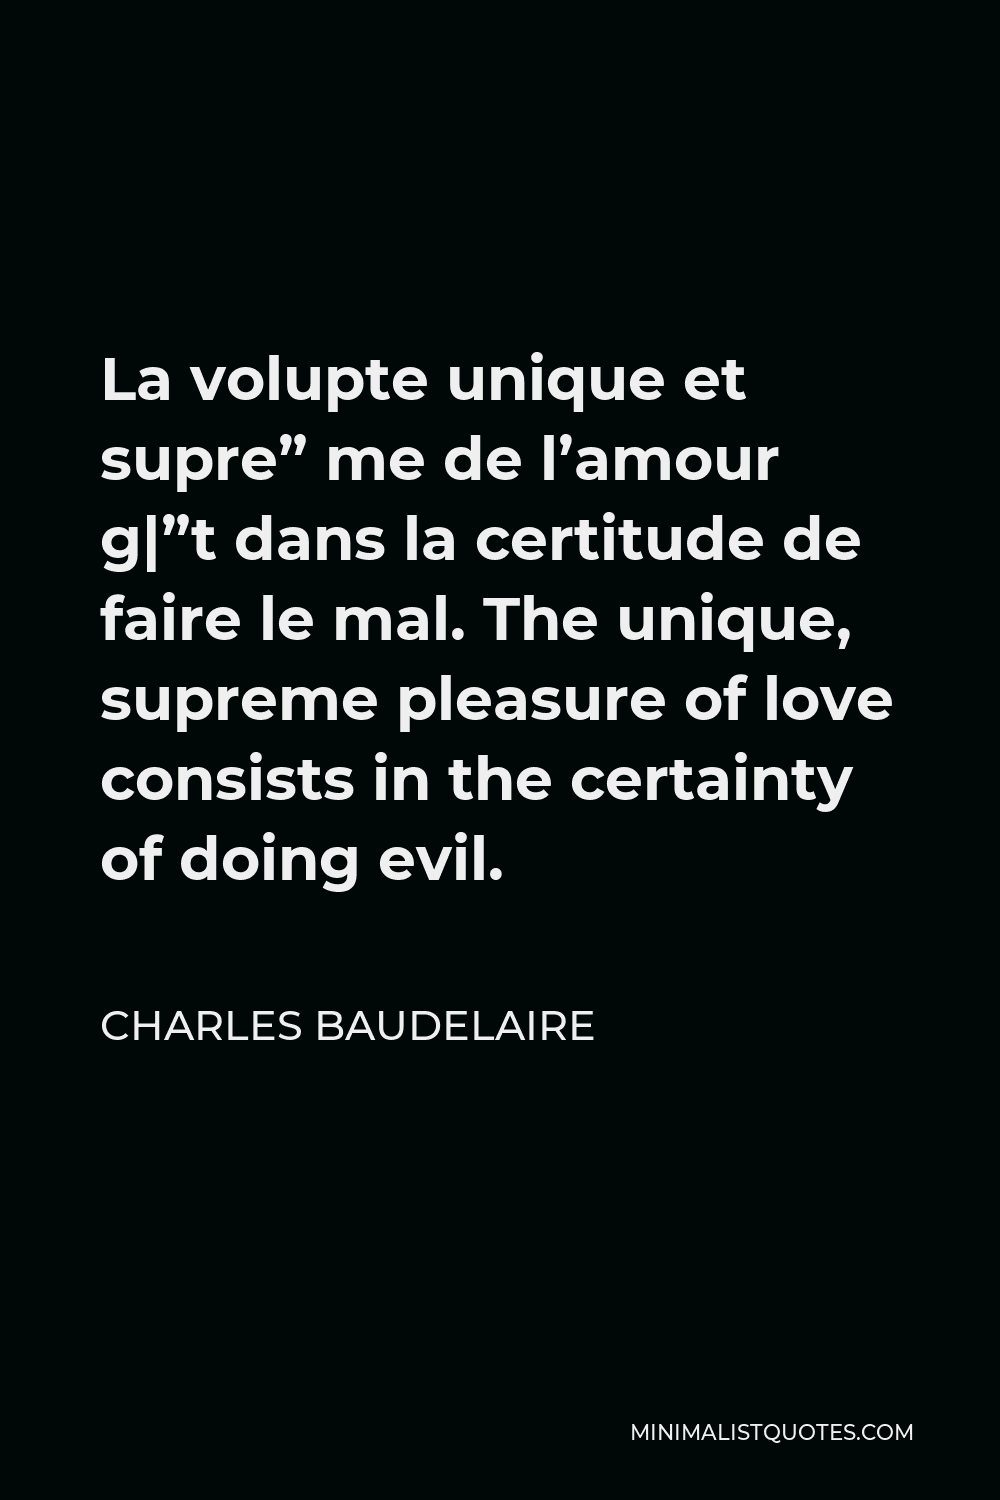 Charles Baudelaire Quote: La volupte unique et supre